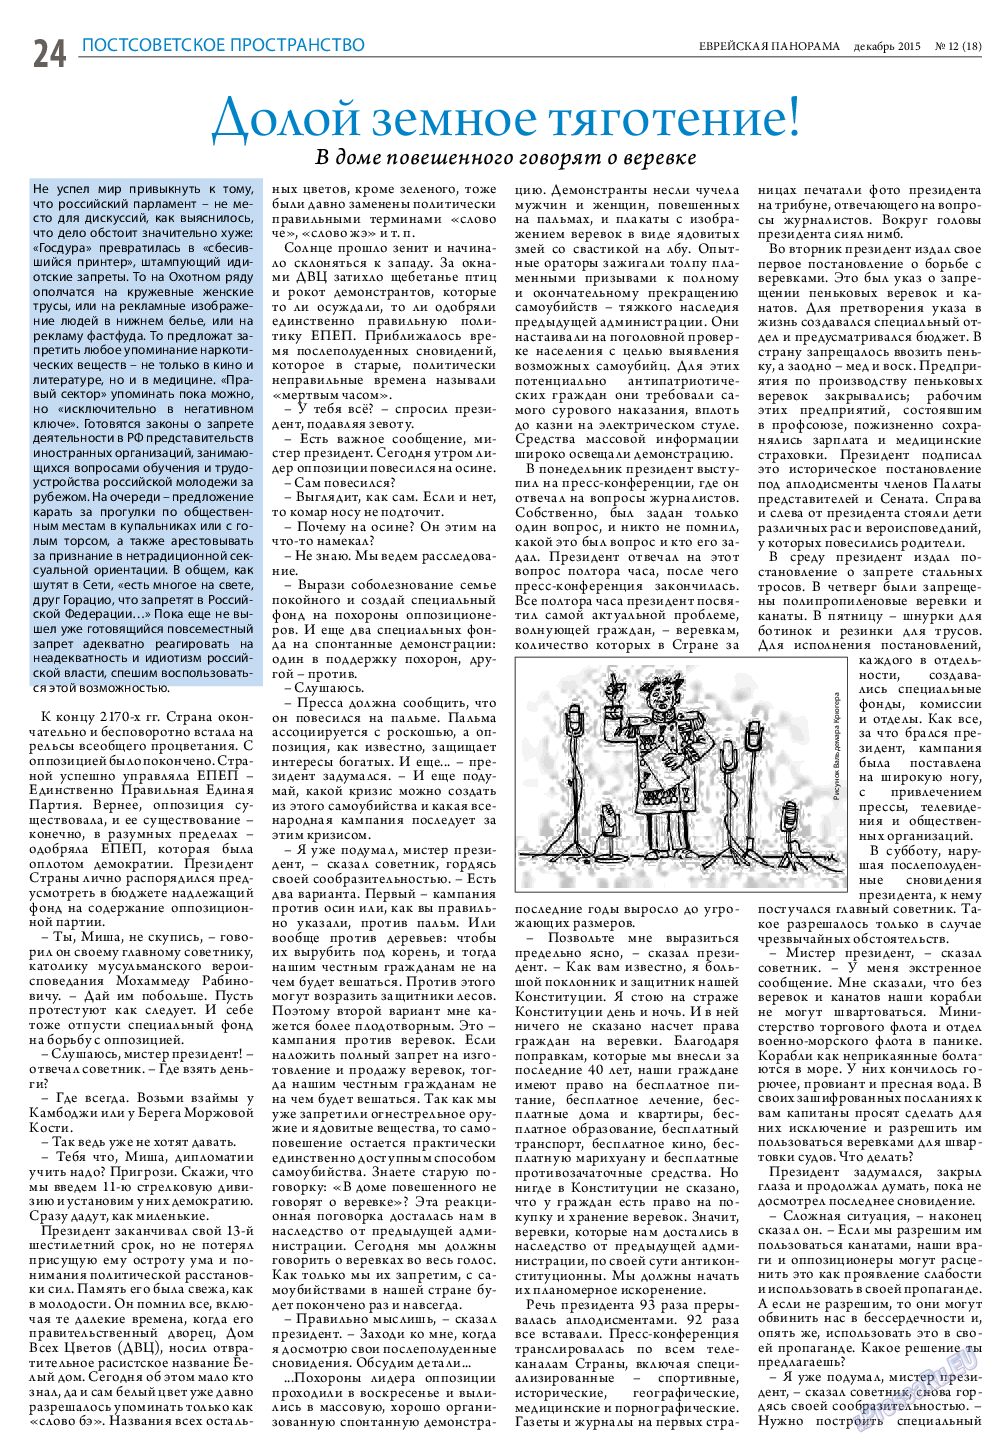 Еврейская панорама, газета. 2015 №12 стр.24